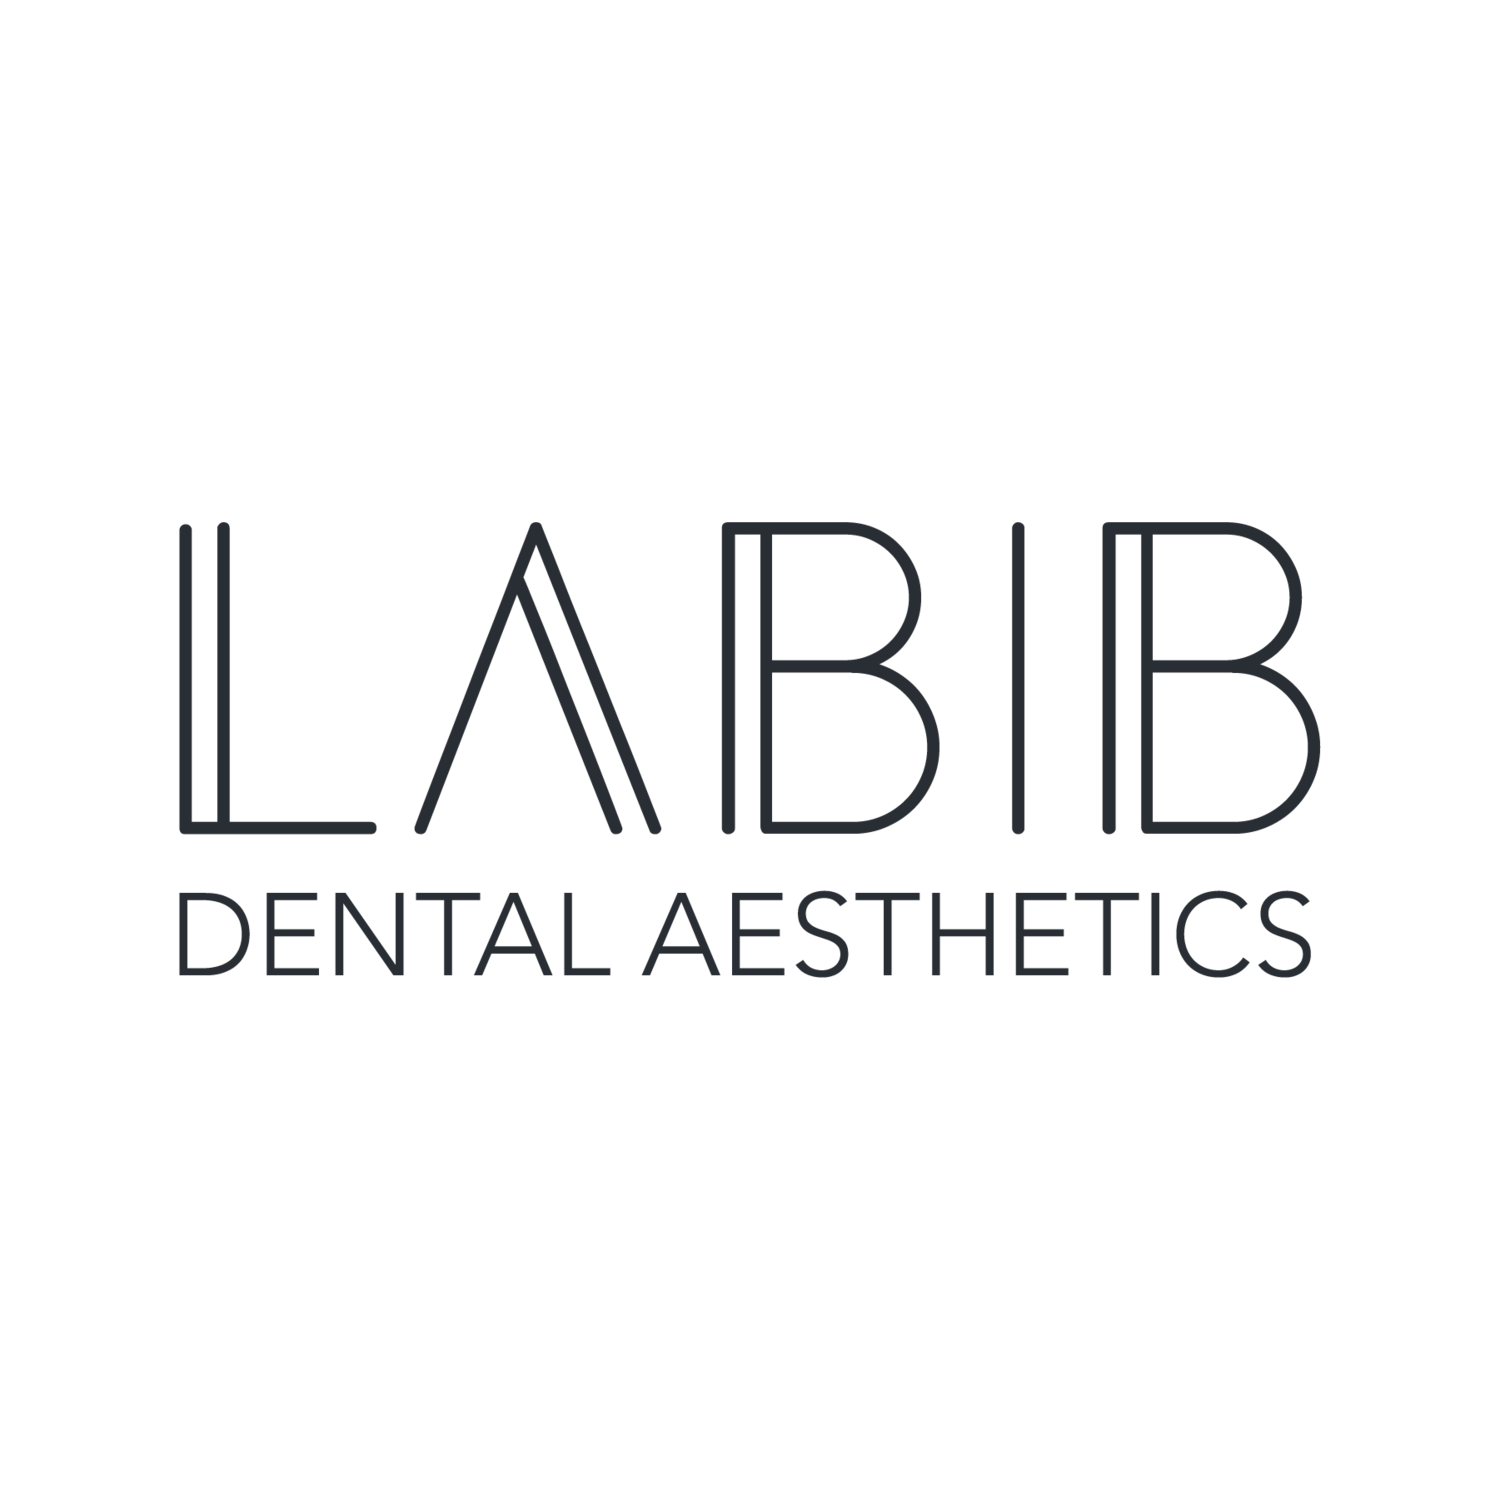 Labib Dental Aesthetics